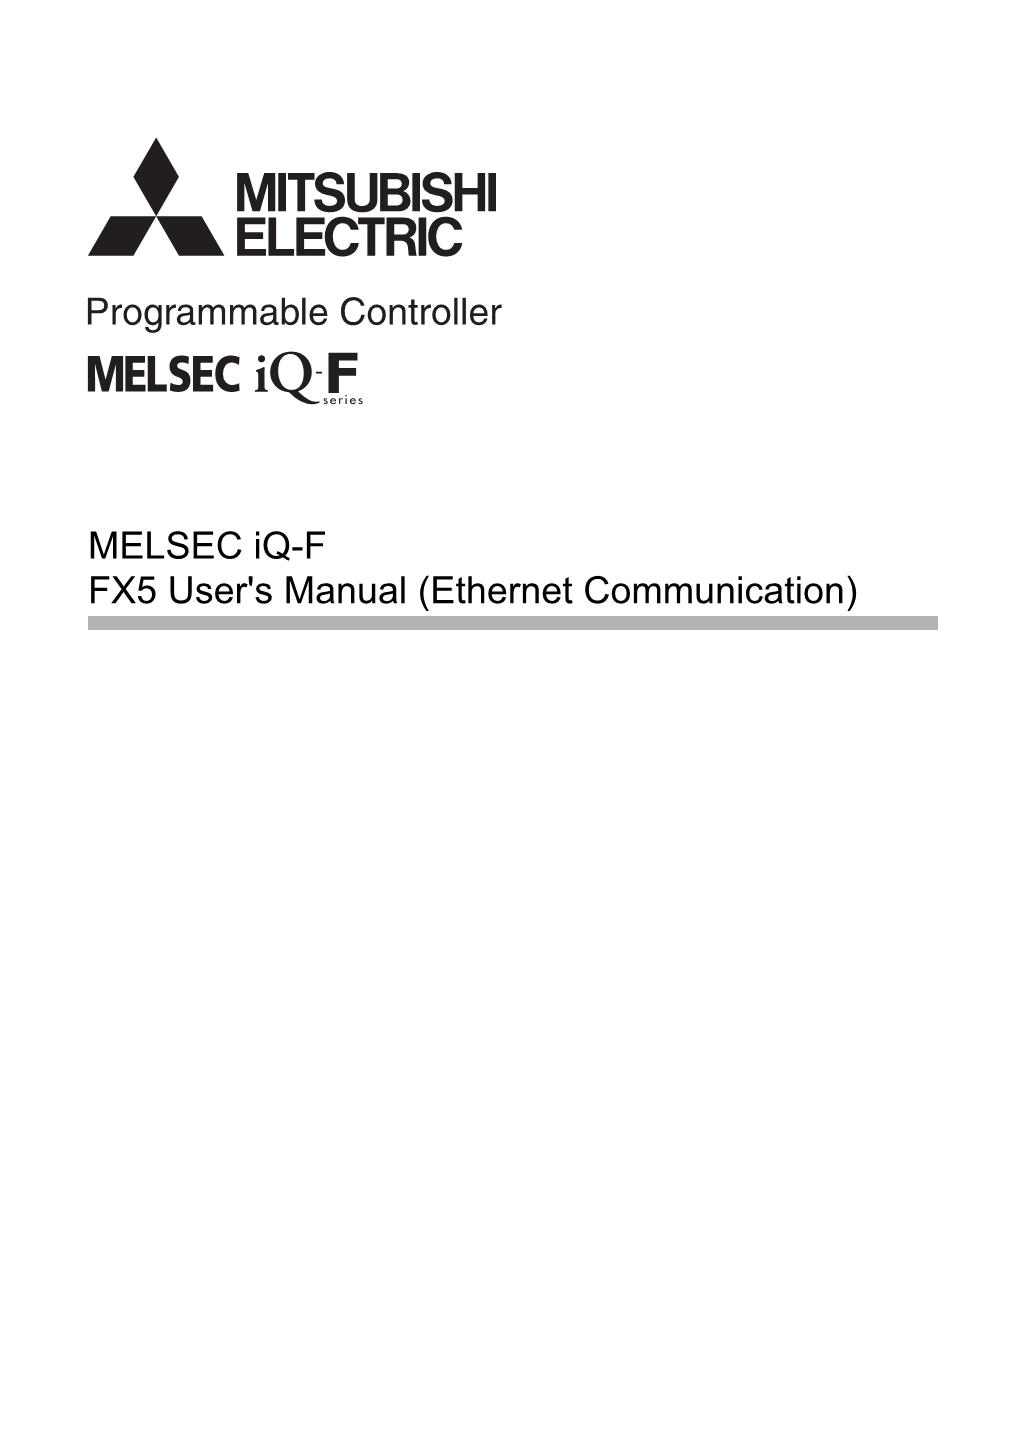 MELSEC Iq-F FX5 User's Manual (Ethernet Communication)